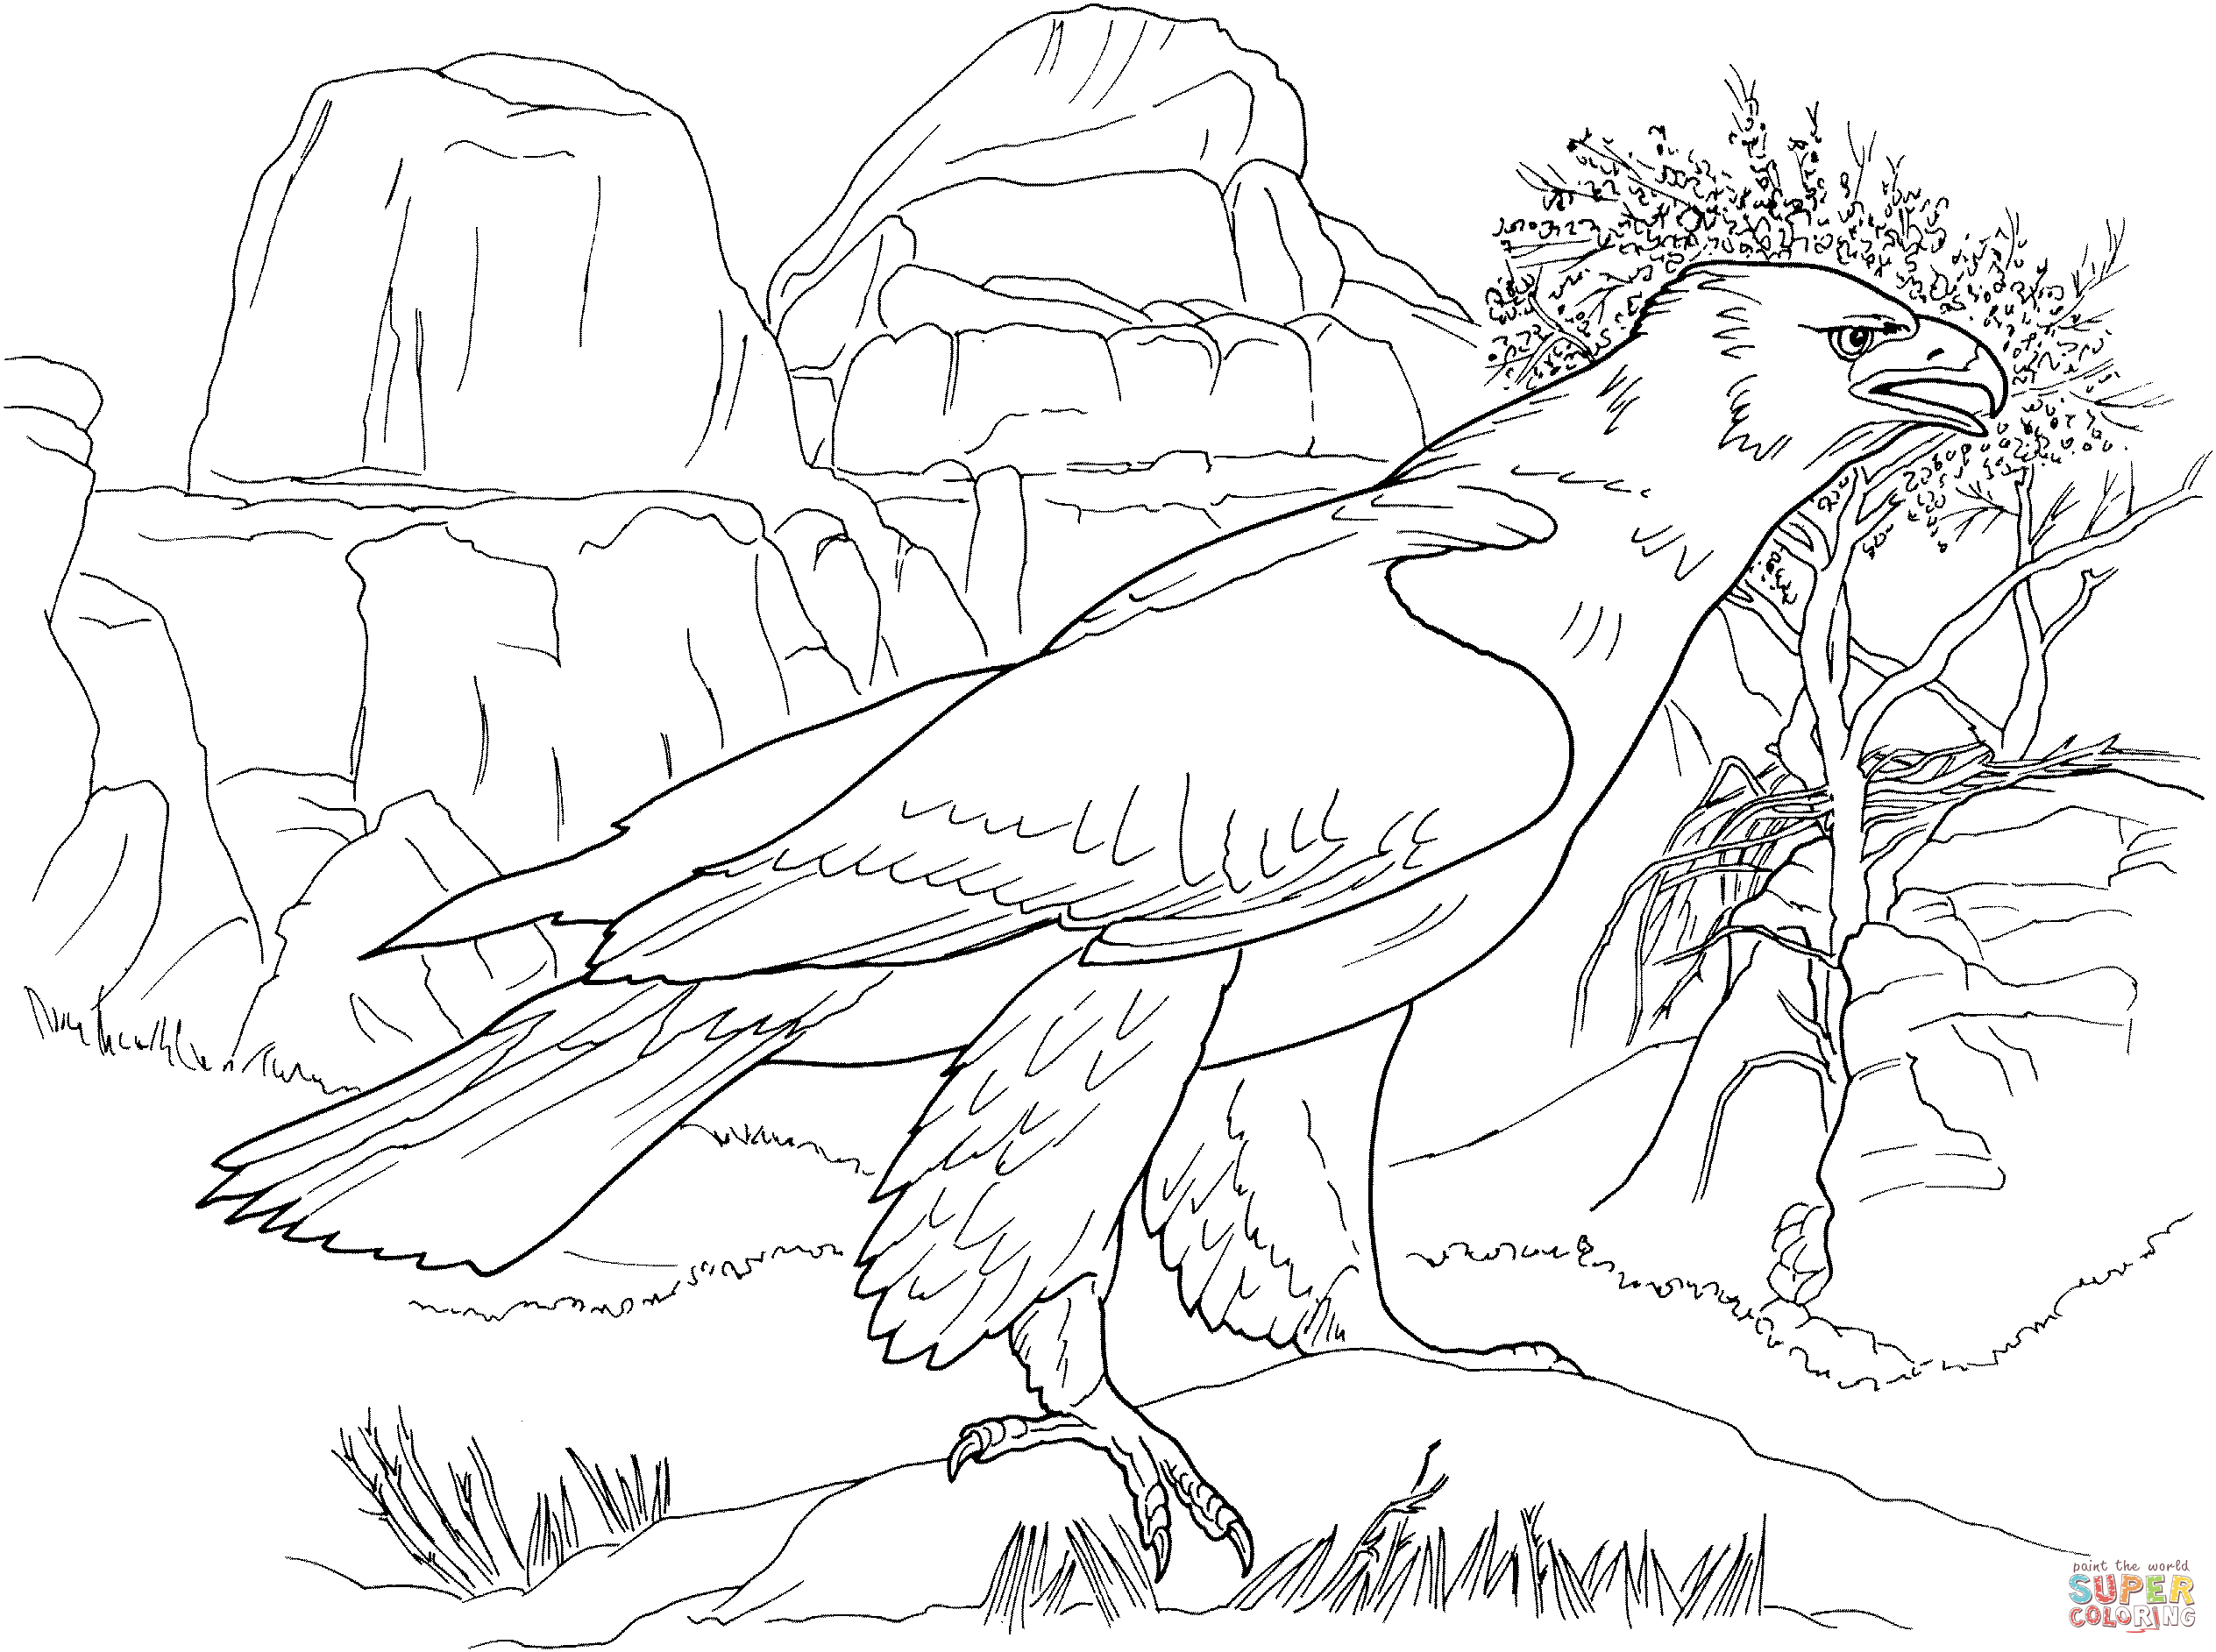 Image result for golden eagle coloring sheet desert animals coloring coloring pages animal coloring pages